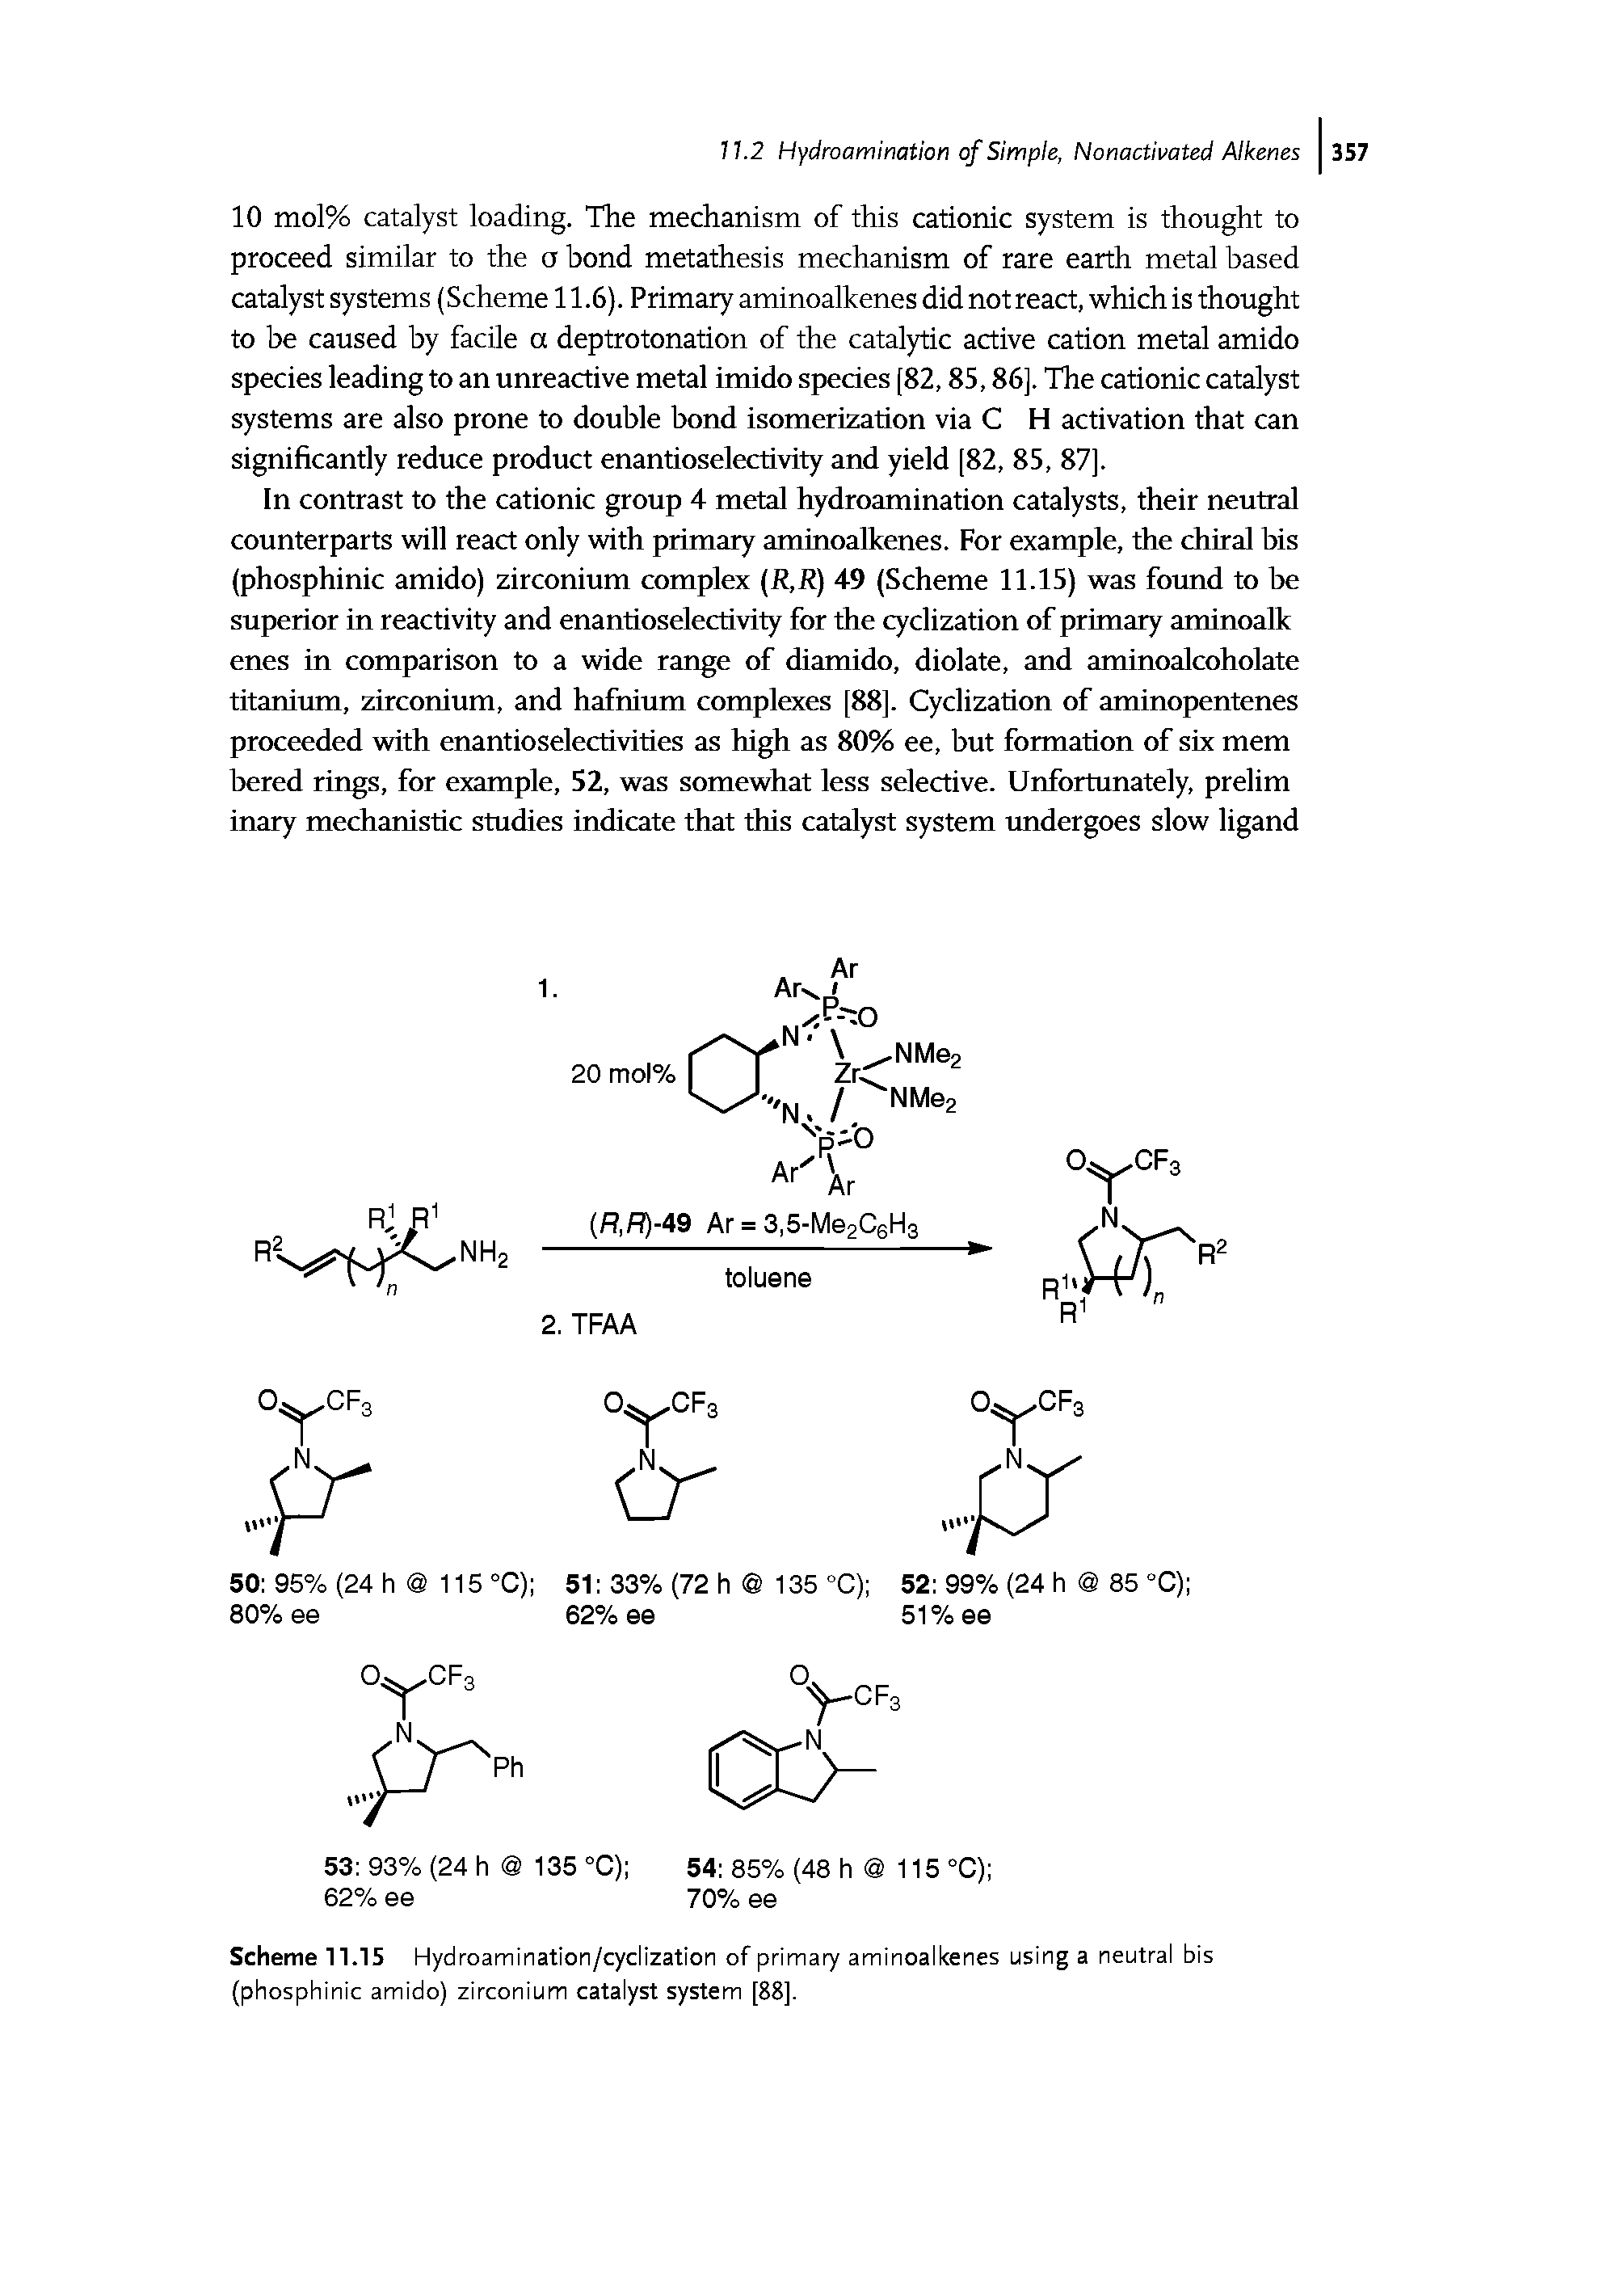 Scheme 11.15 Hydroamination/cyclization of primary aminoalkenes using a neutral bis (phosphinic amido) zirconium catalyst system [88].